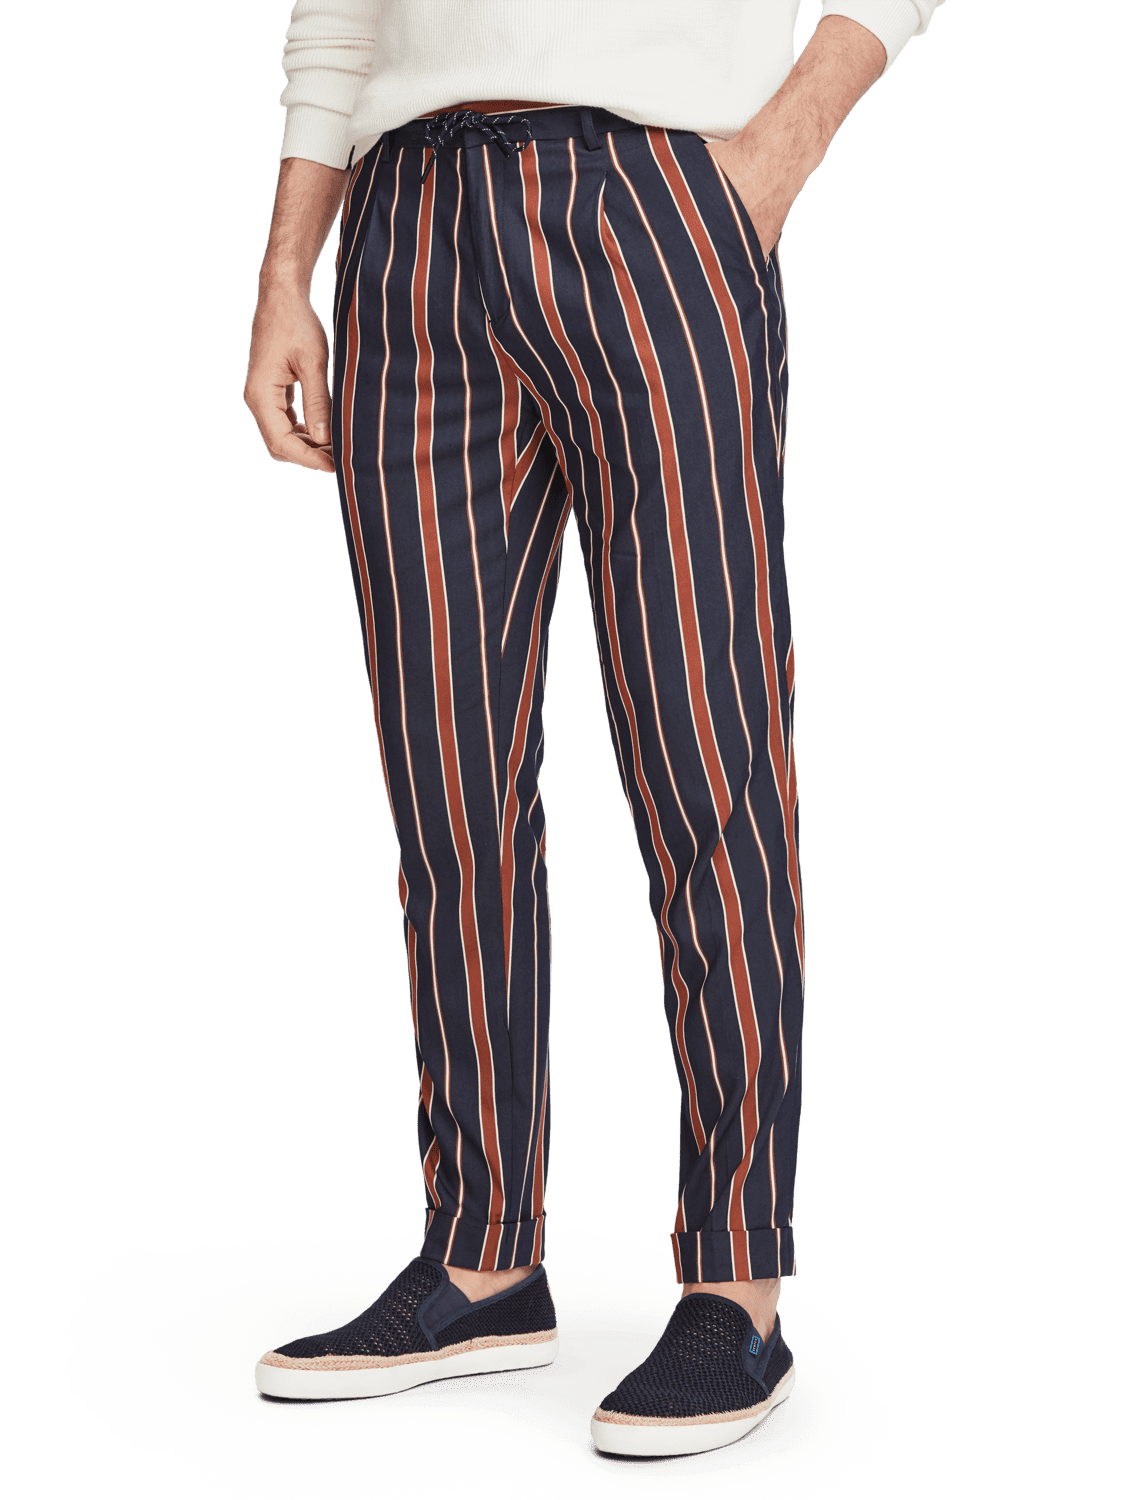 BLAKE - Chic striped chino with elasticated waistband | Scotch & Soda